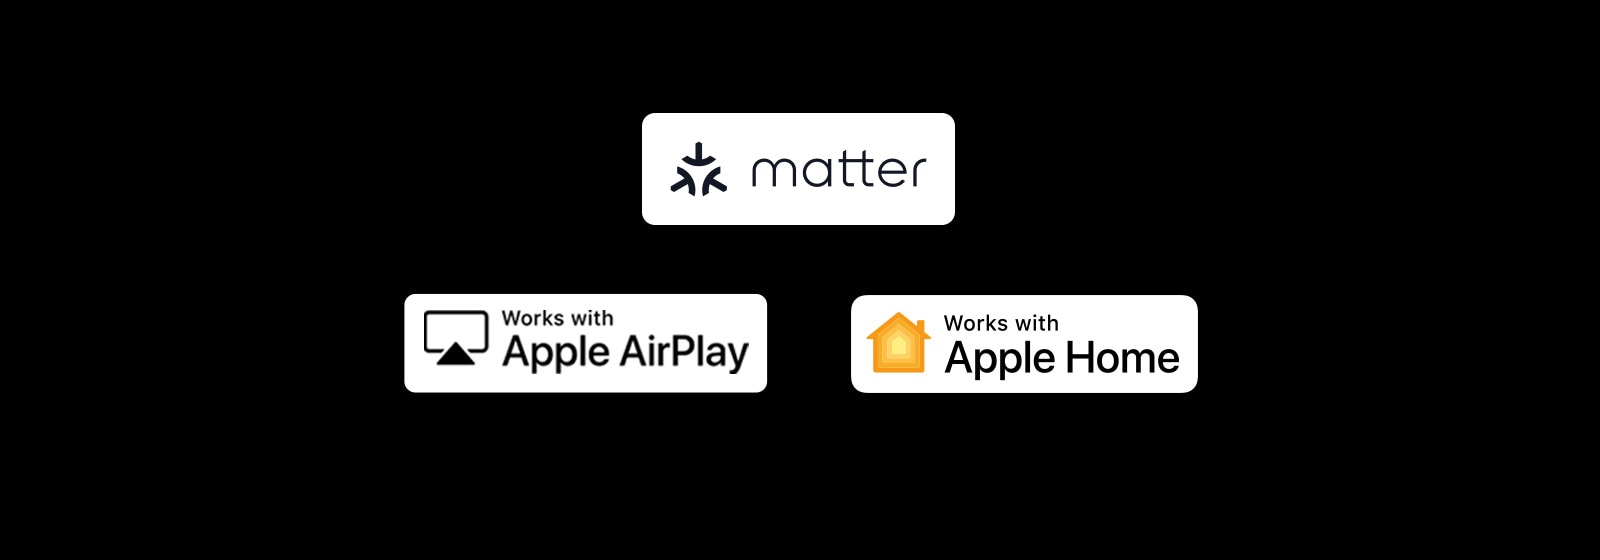 Logotip alexa built-in Logotip Works with Apple Airplay Logotip Works with Apple Home Logotip Works with Matter